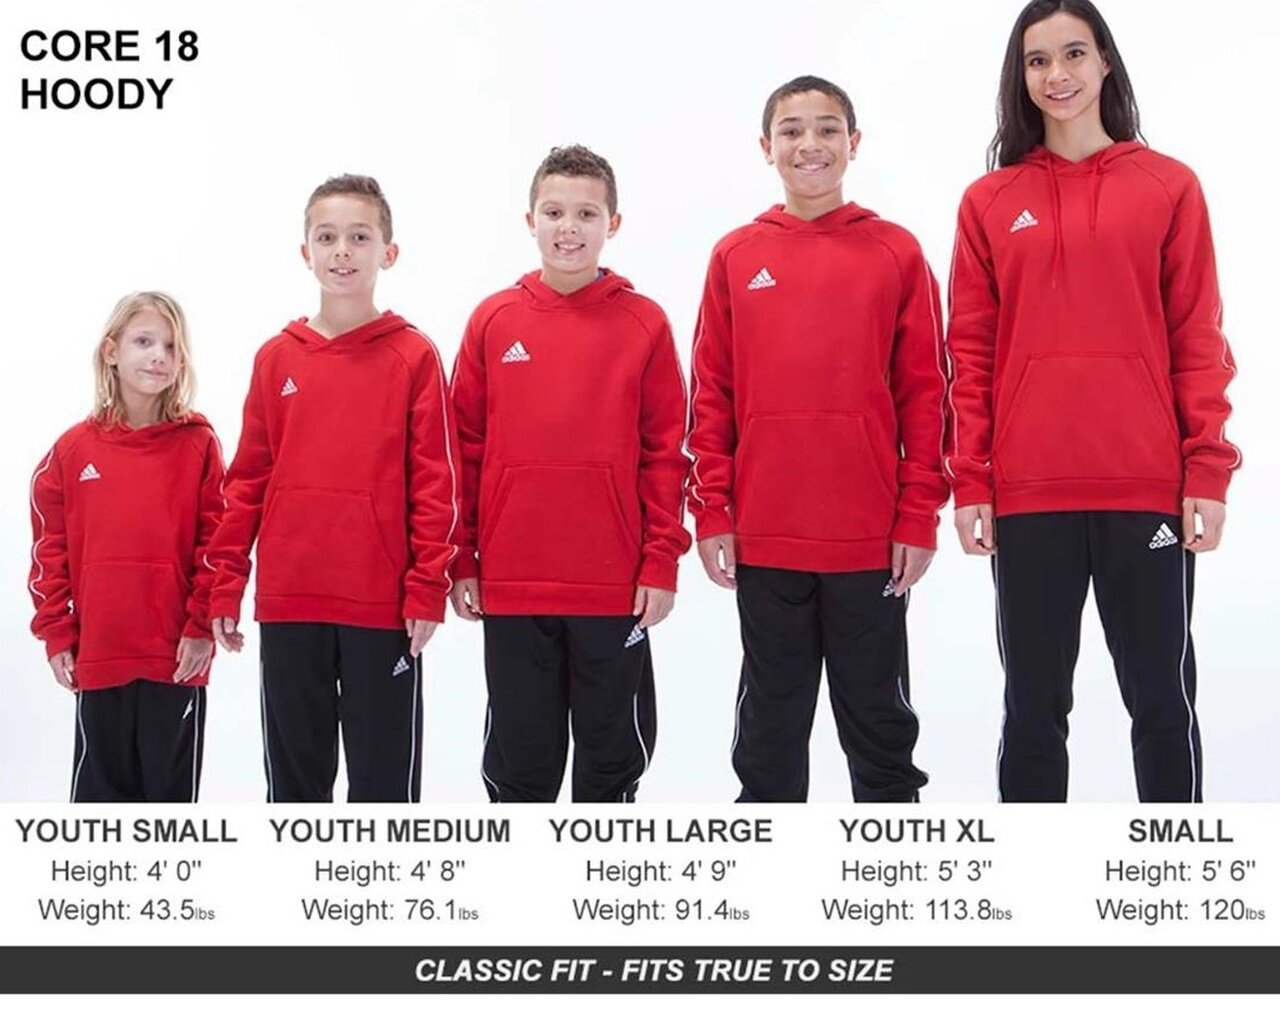 youth medium size jersey